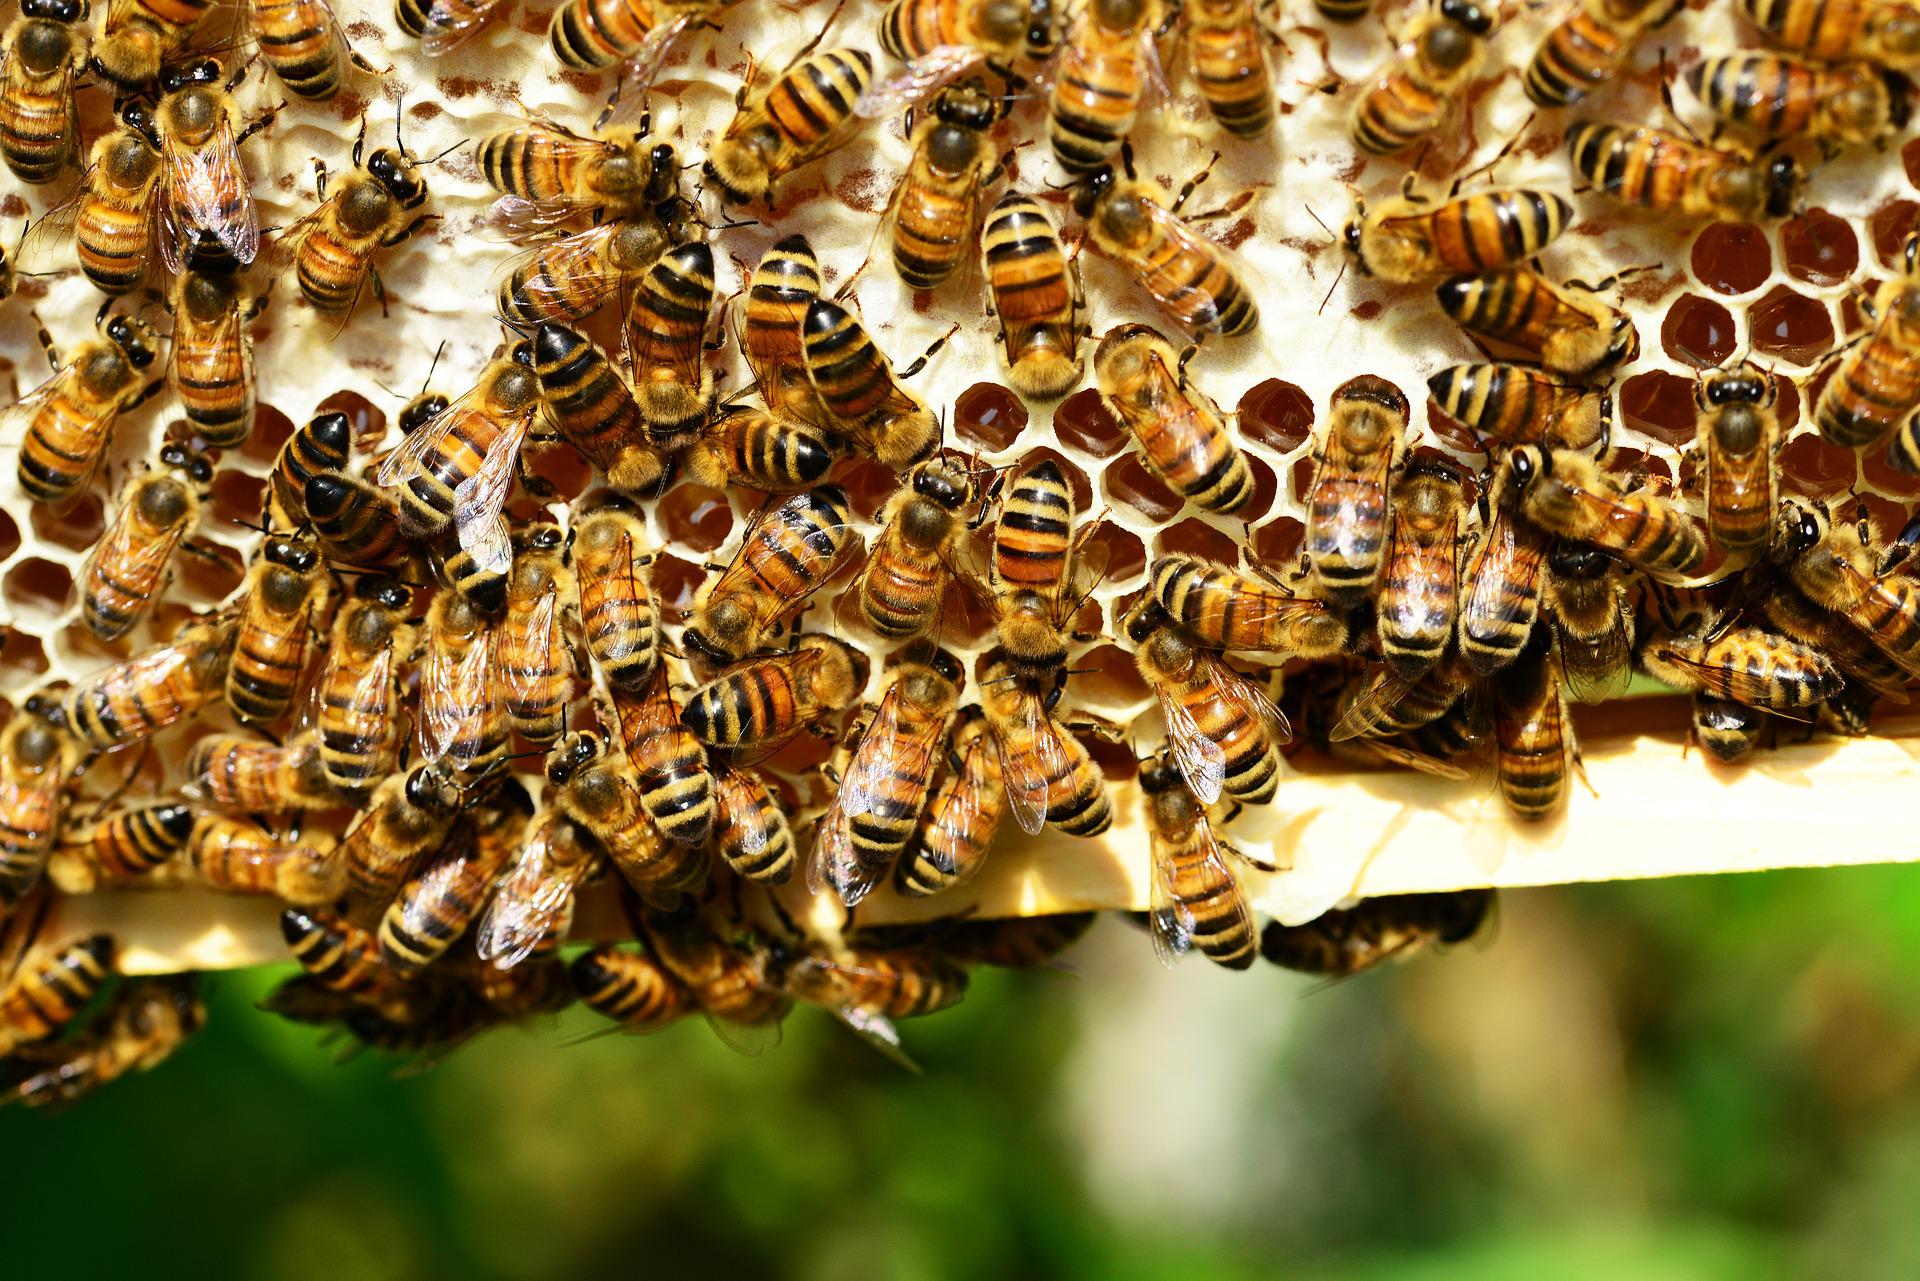 Ochtendbriefing vrijdag: bijen en innovatie